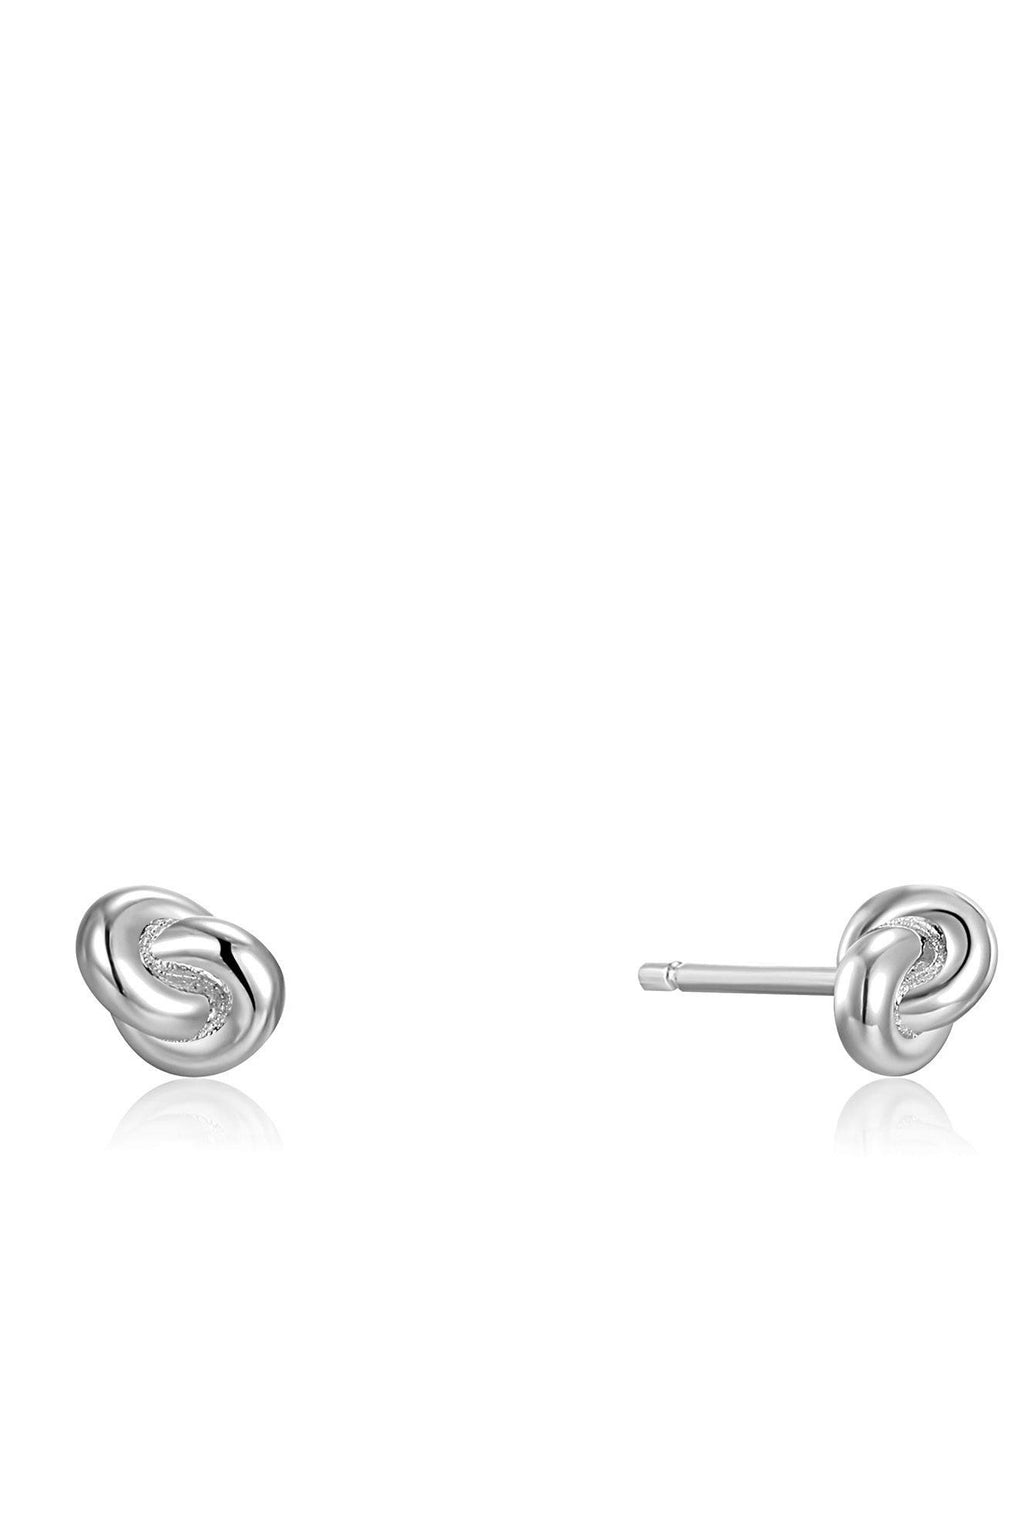 Ania Haie Silver Knot Stud Earrings - The Mercantile London